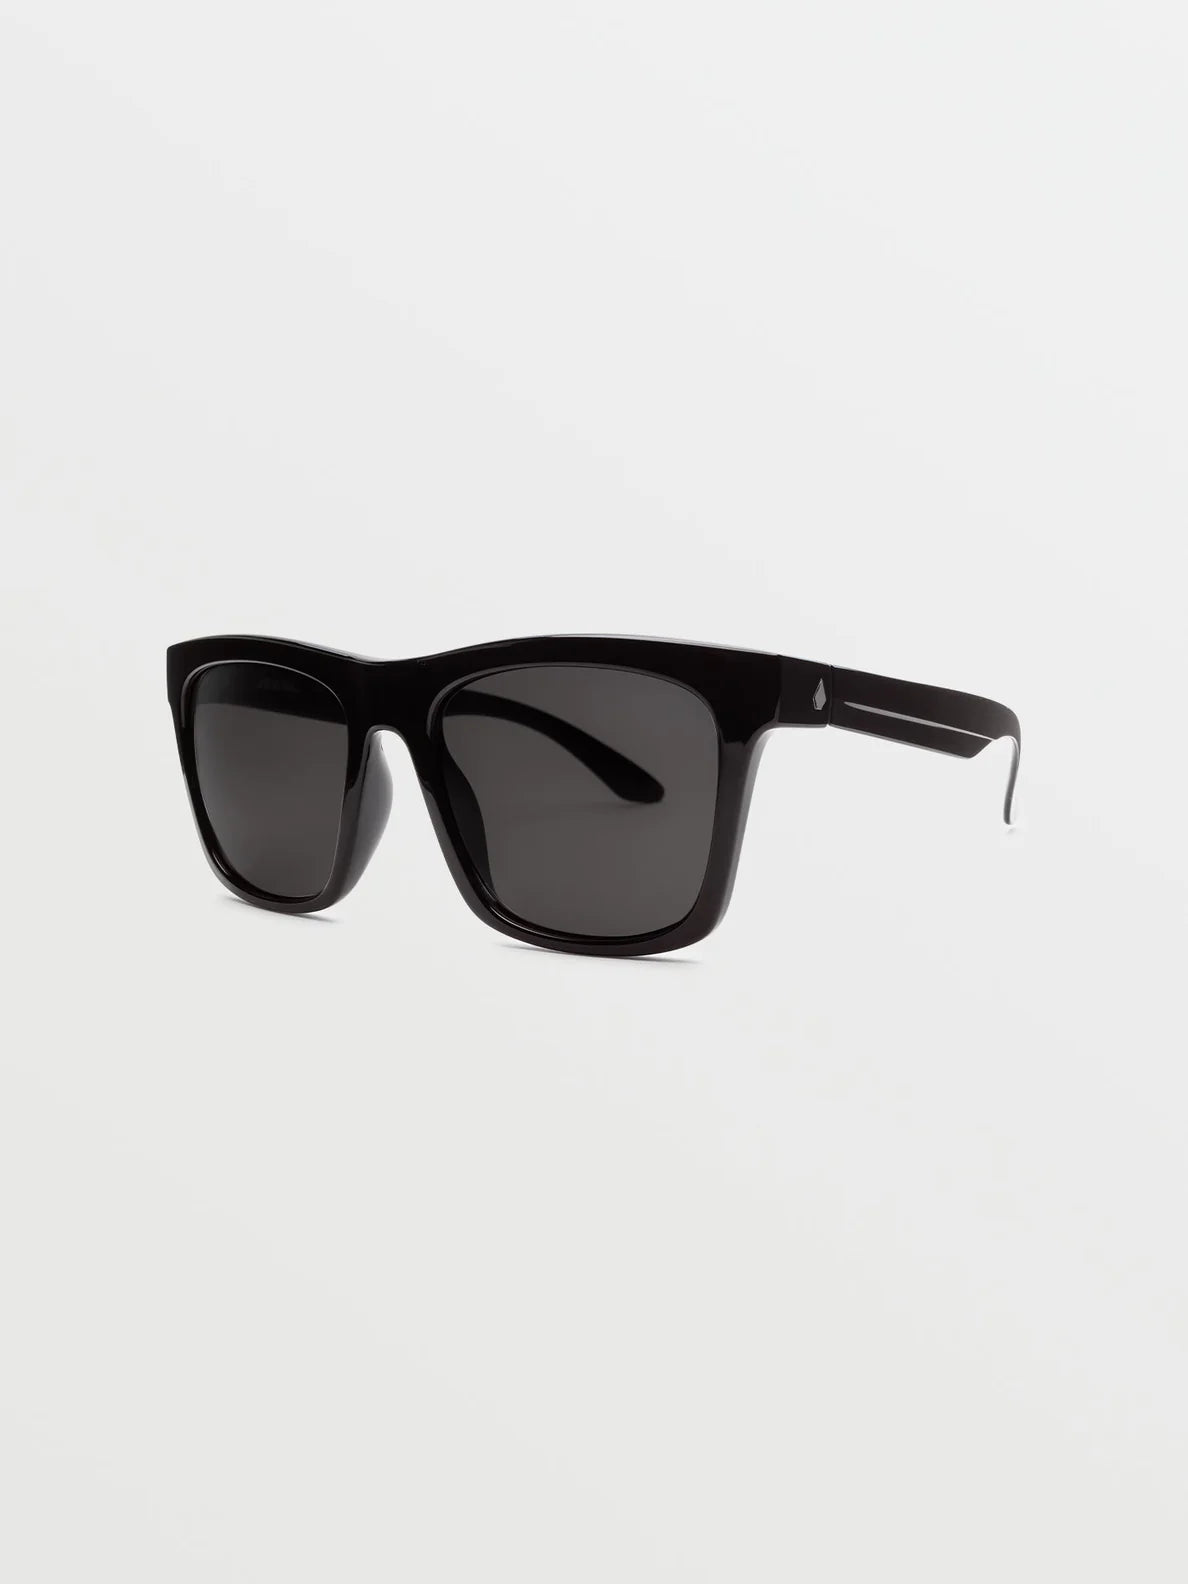 Gafas de sol Volcom Jewel Gloss Black / Gray | Gafas de sol | Volcom Shop | surfdevils.com